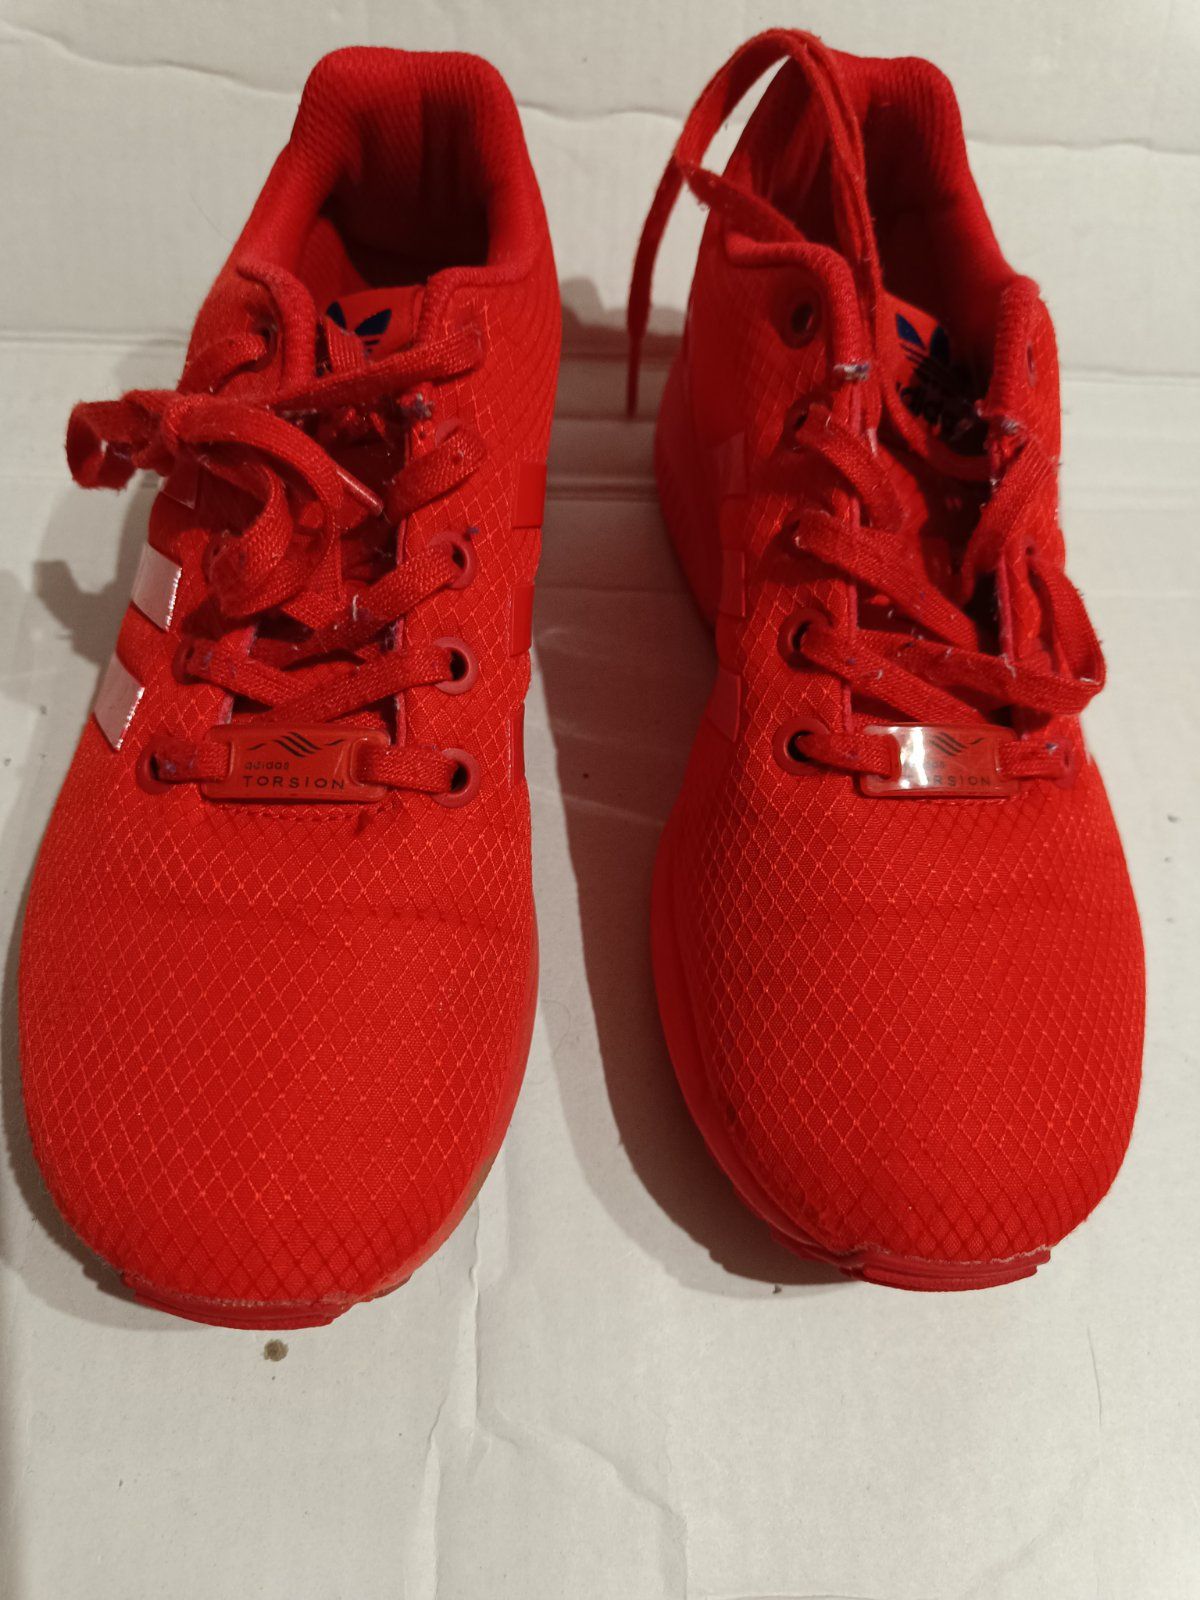 Кроссовки Adidas ZX Flux Weave Men (Red) кроссовки.Размер 36.5